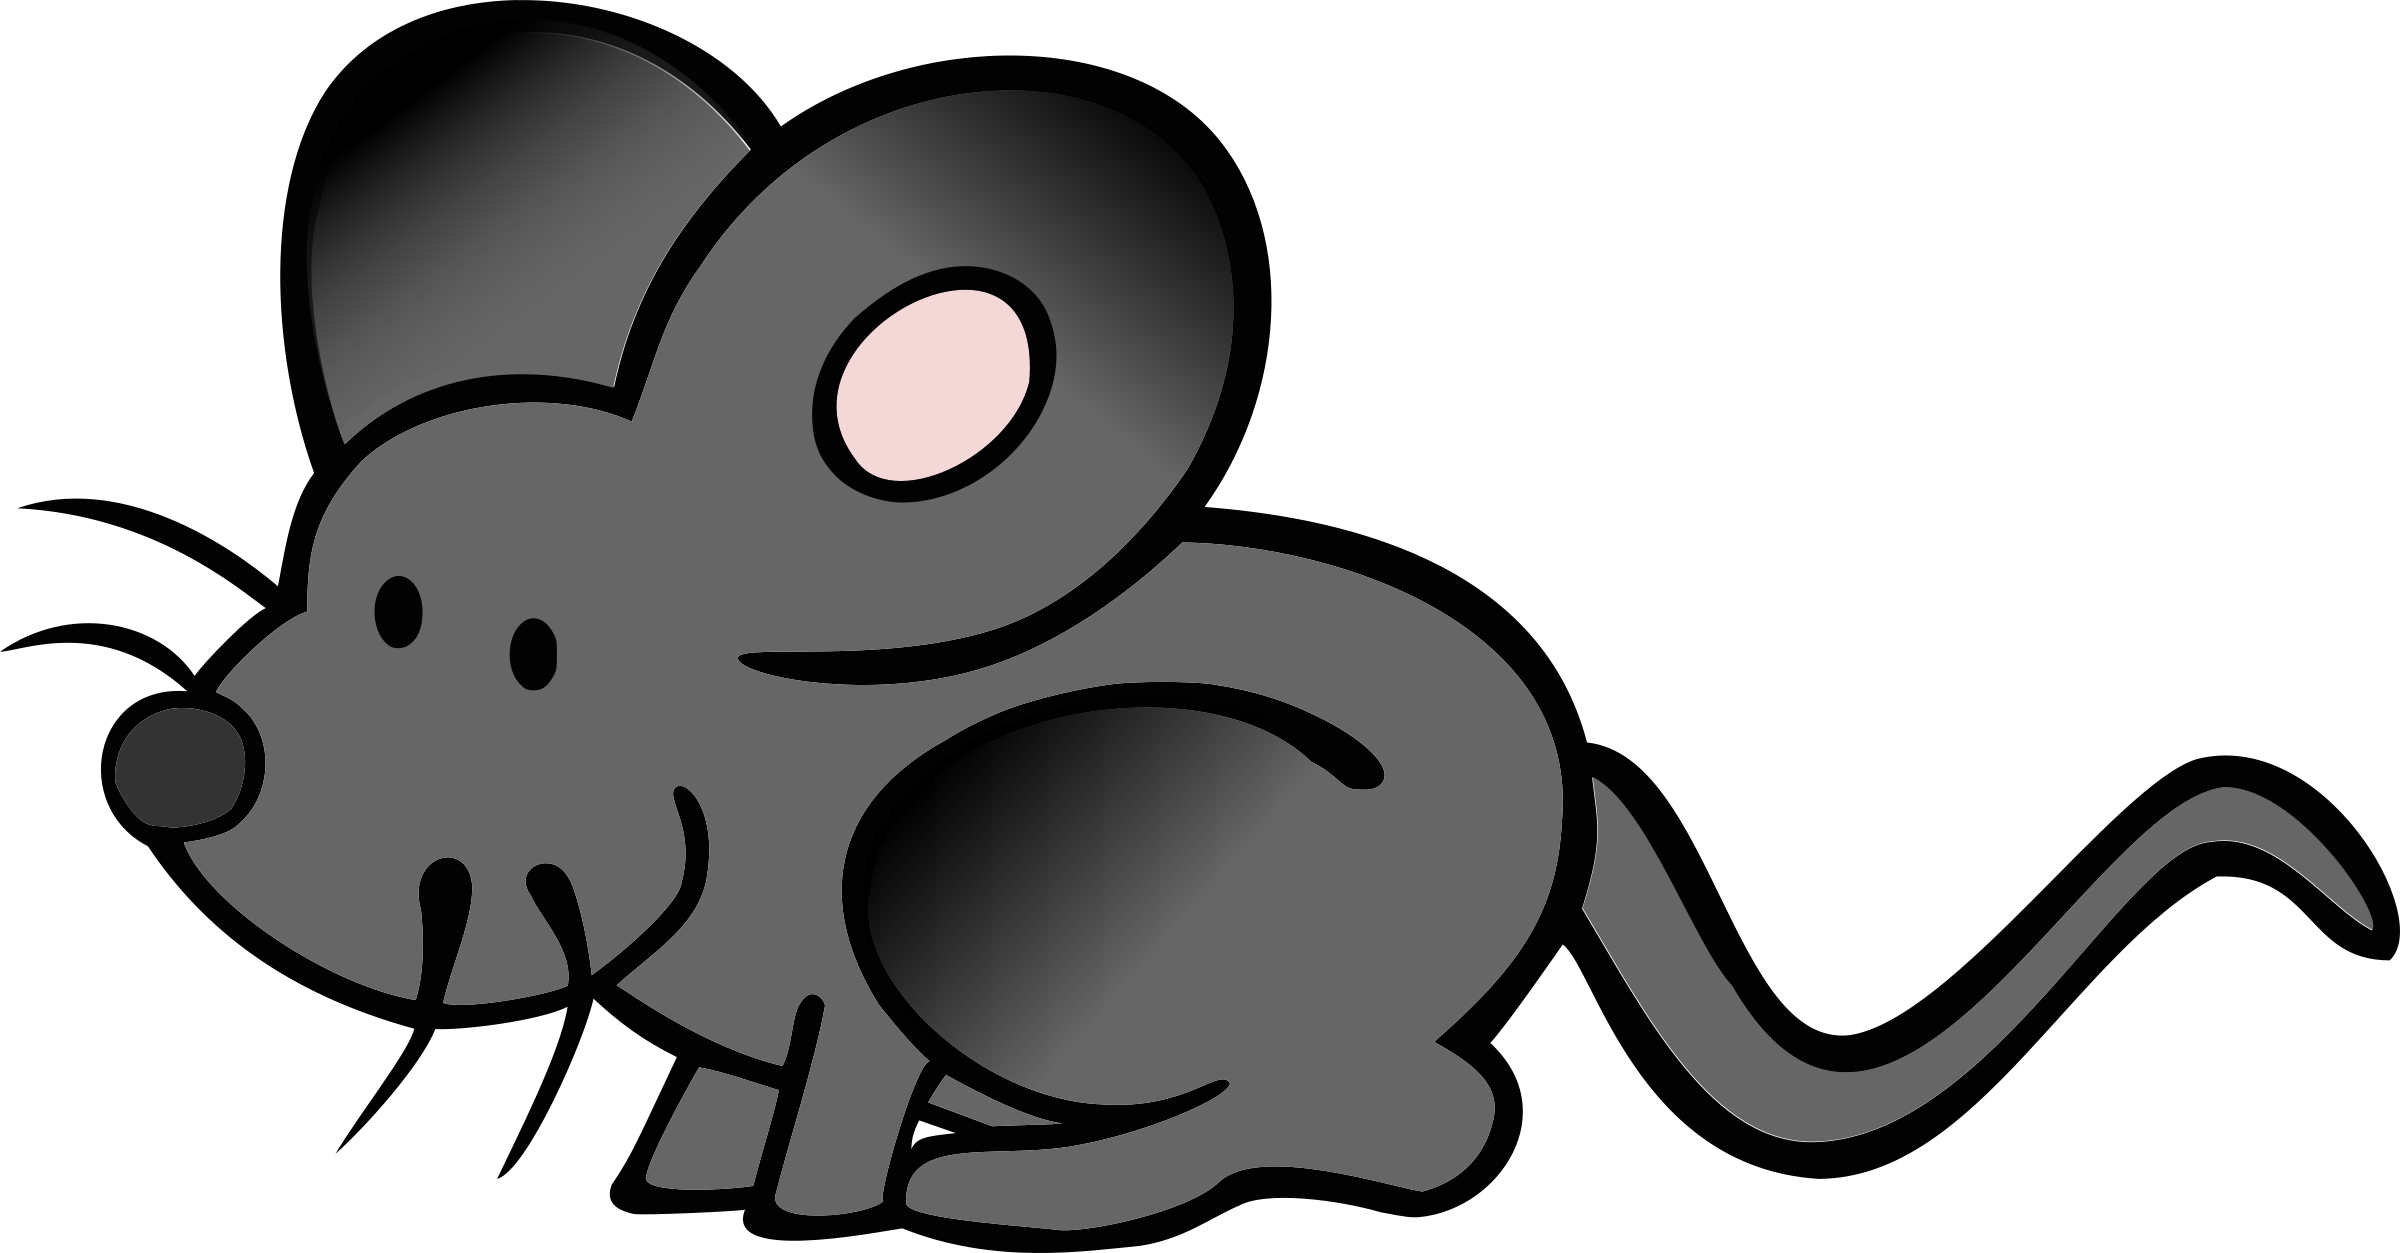 Clipart - Cartoon mouse